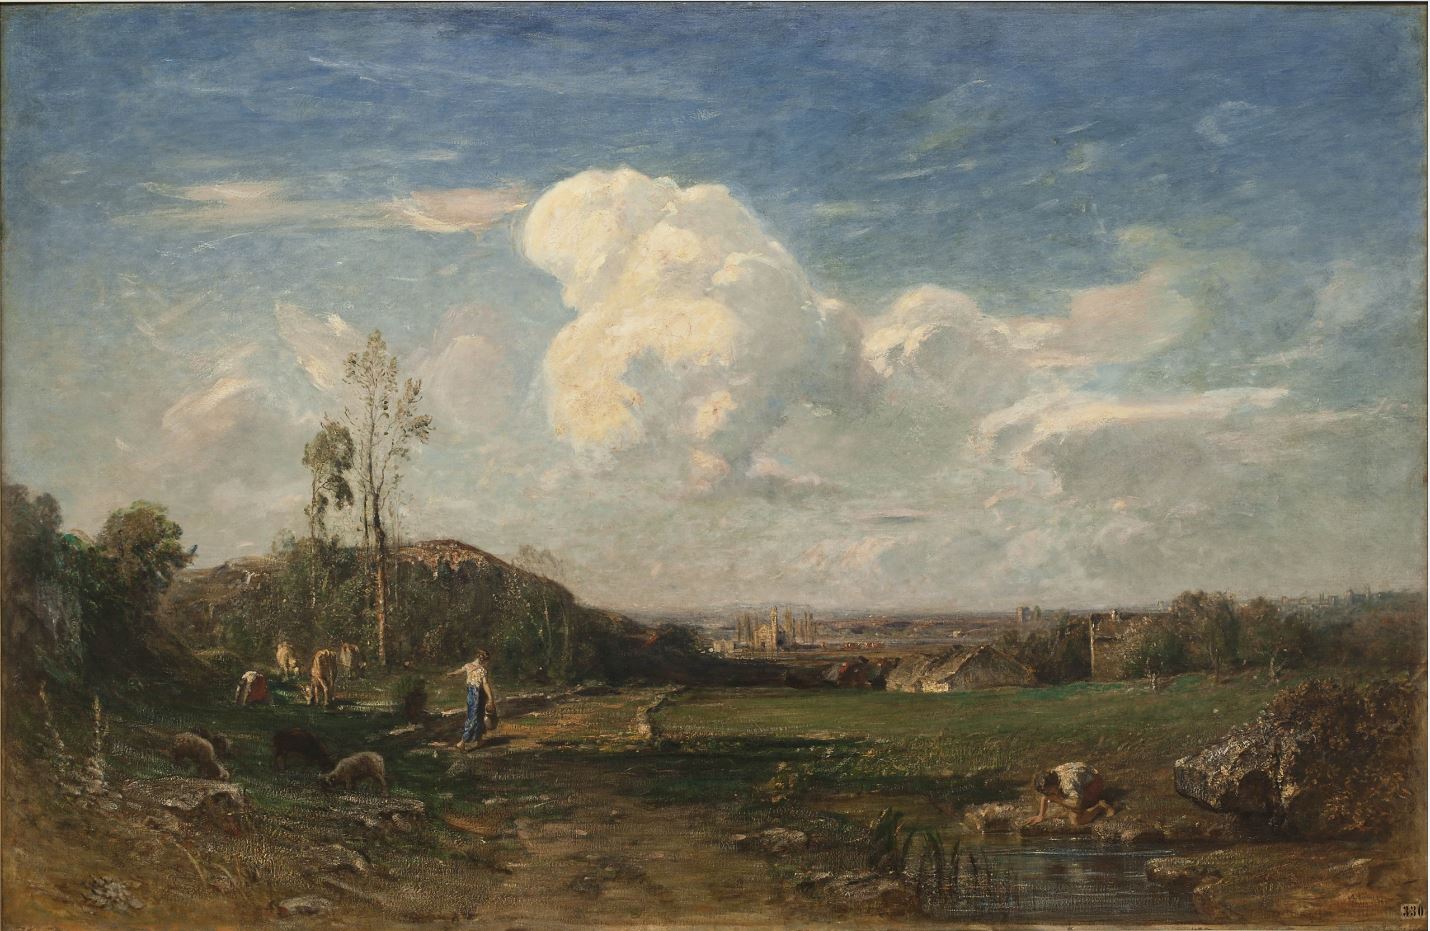 Antonio Fontanesi, Le nubi (1880; olio su tela, 200 x 300 cm; Torino, GAM - Galleria Civica d'Arte Moderna e Contemporanea)
 